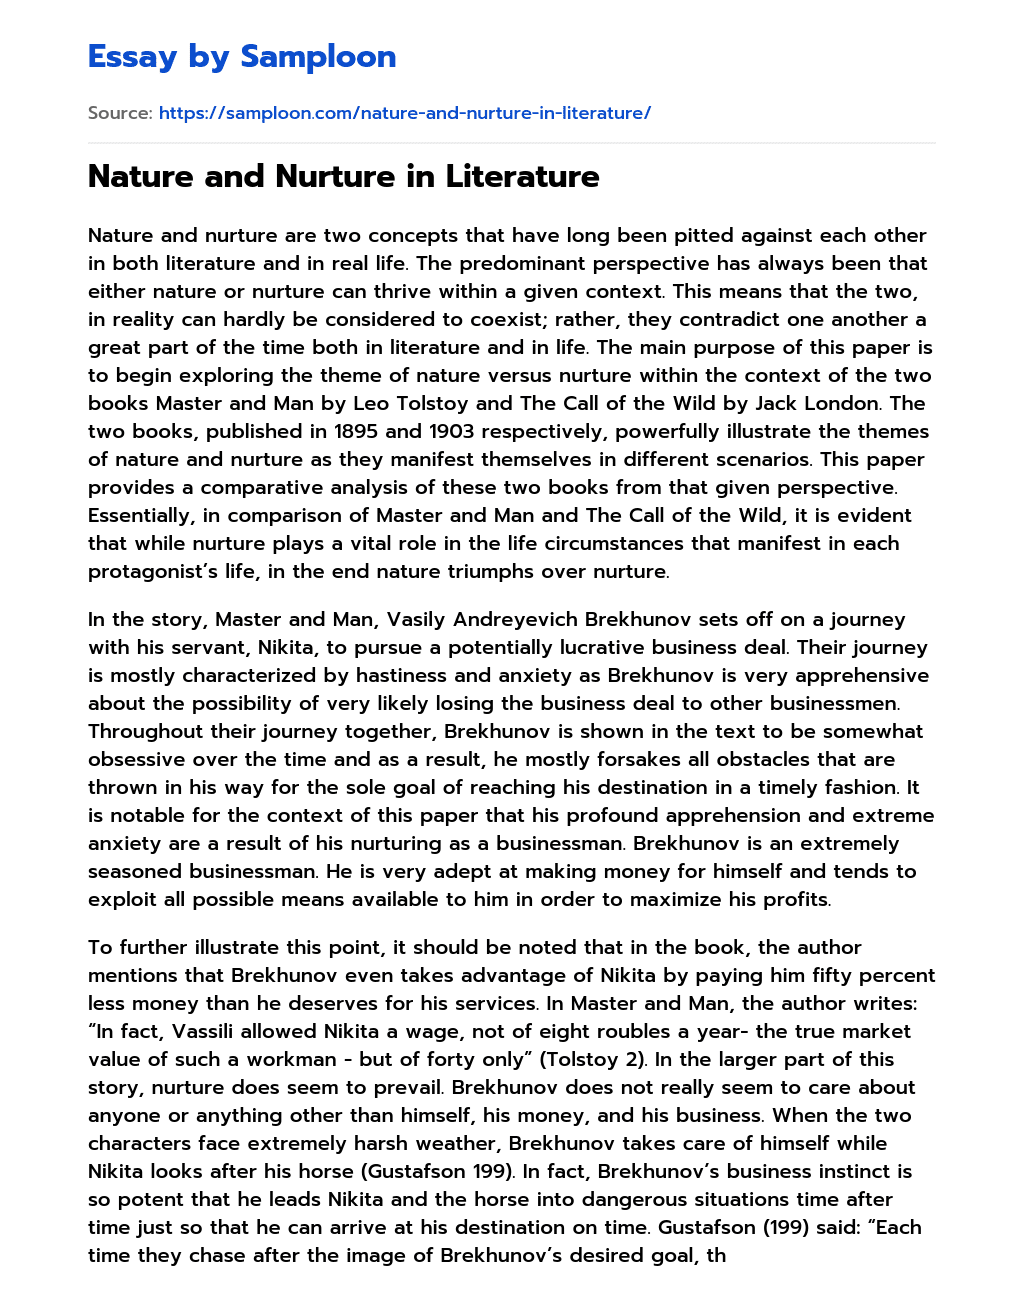 Nature and Nurture in Literature essay